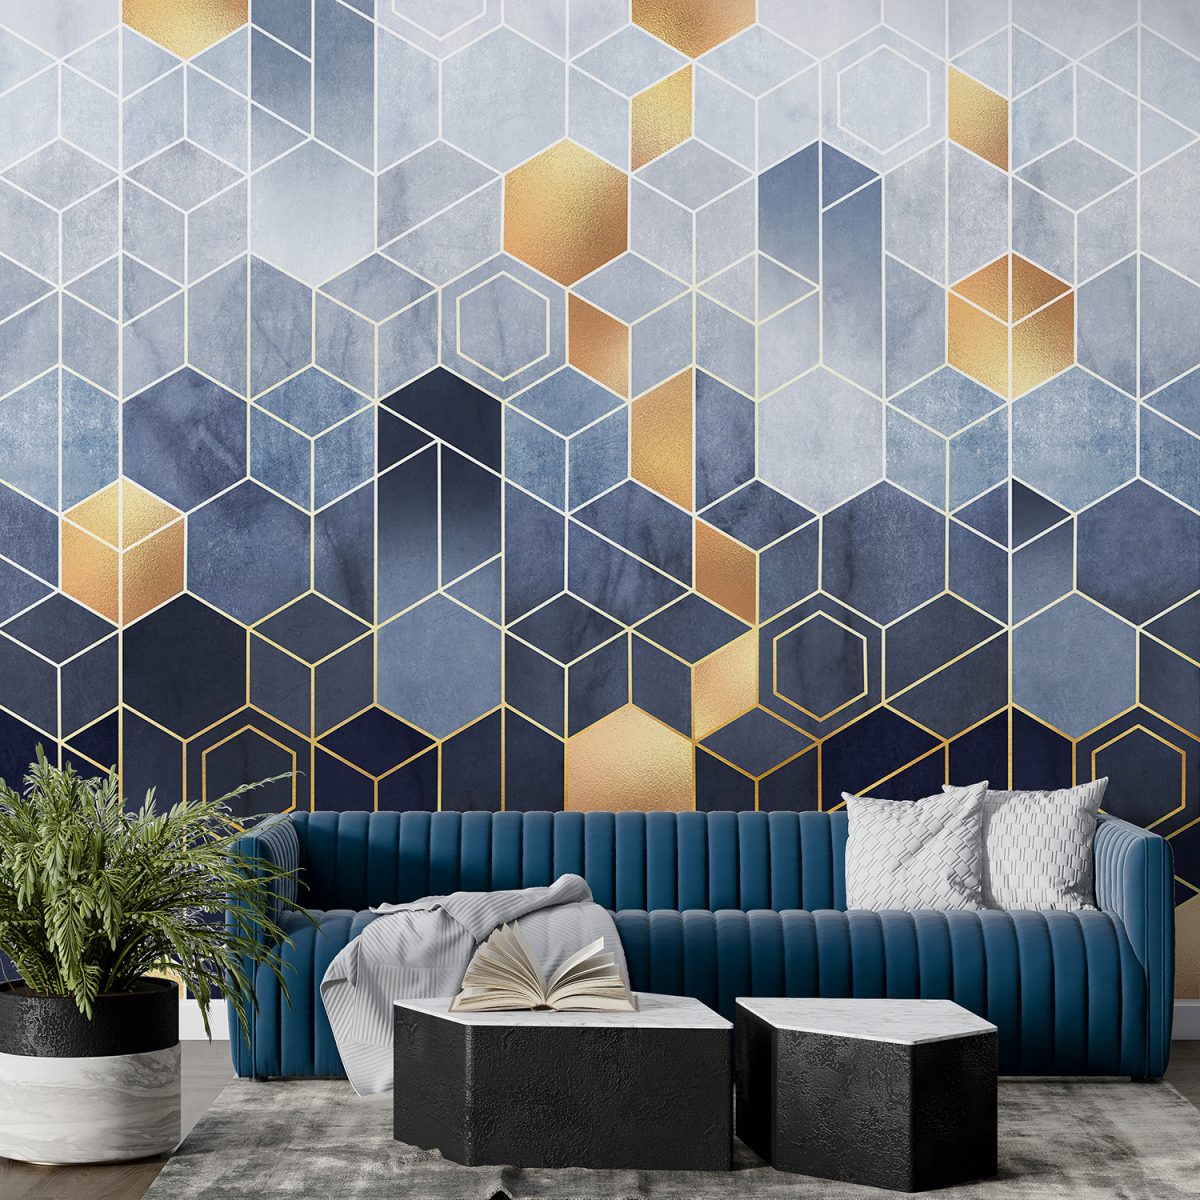 Hexagonal Gold Wallpapers For Walls